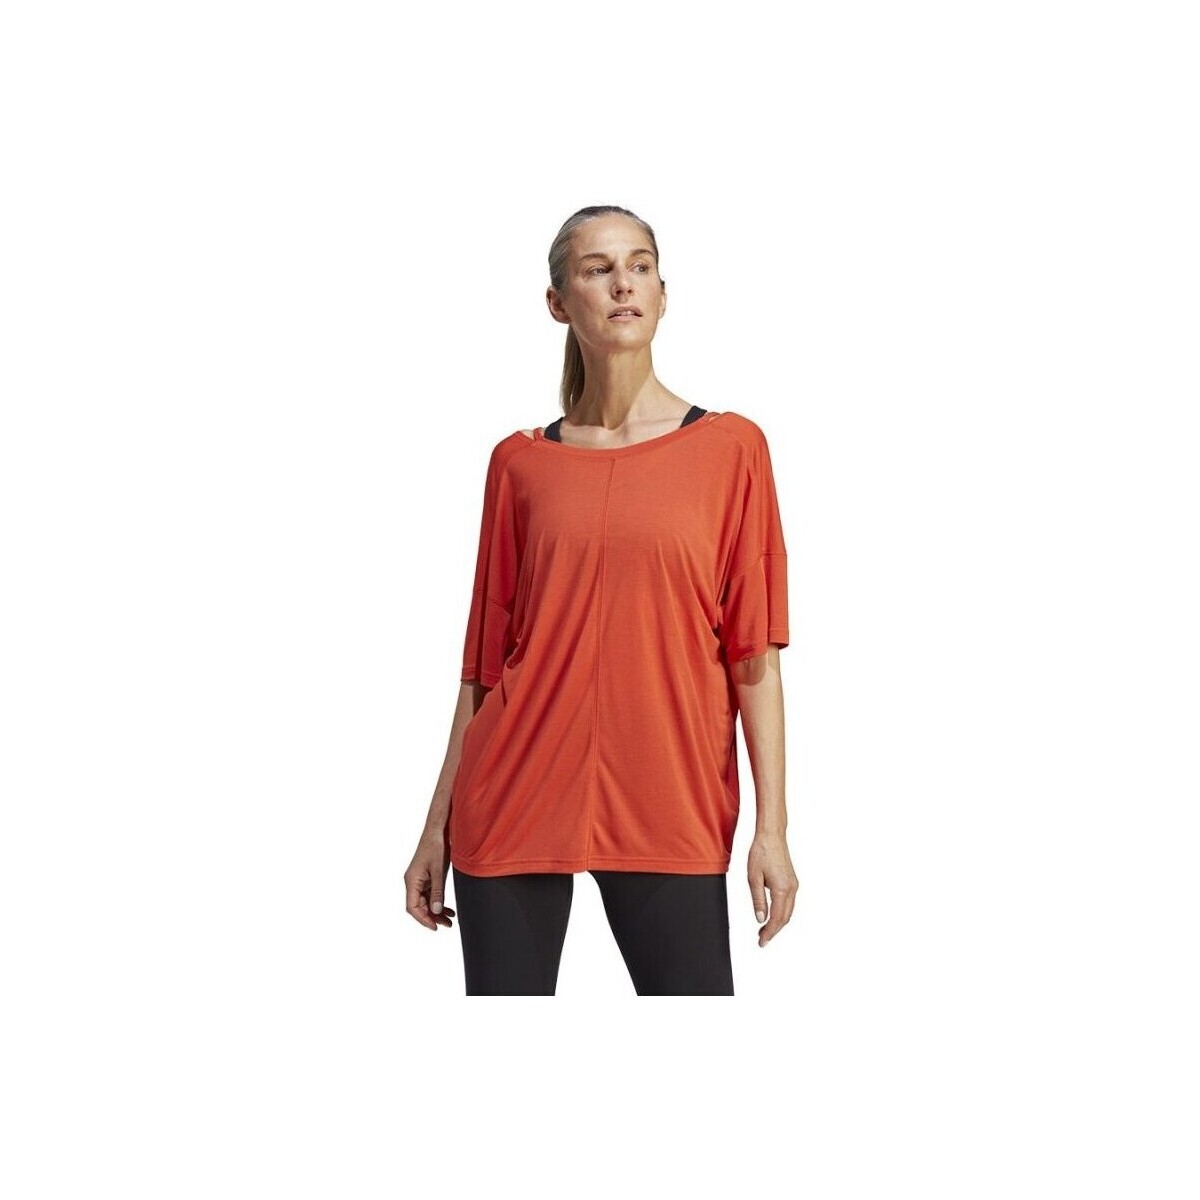 Textil Ženy Trička s krátkým rukávem adidas Originals Yoga Studio Oranžová